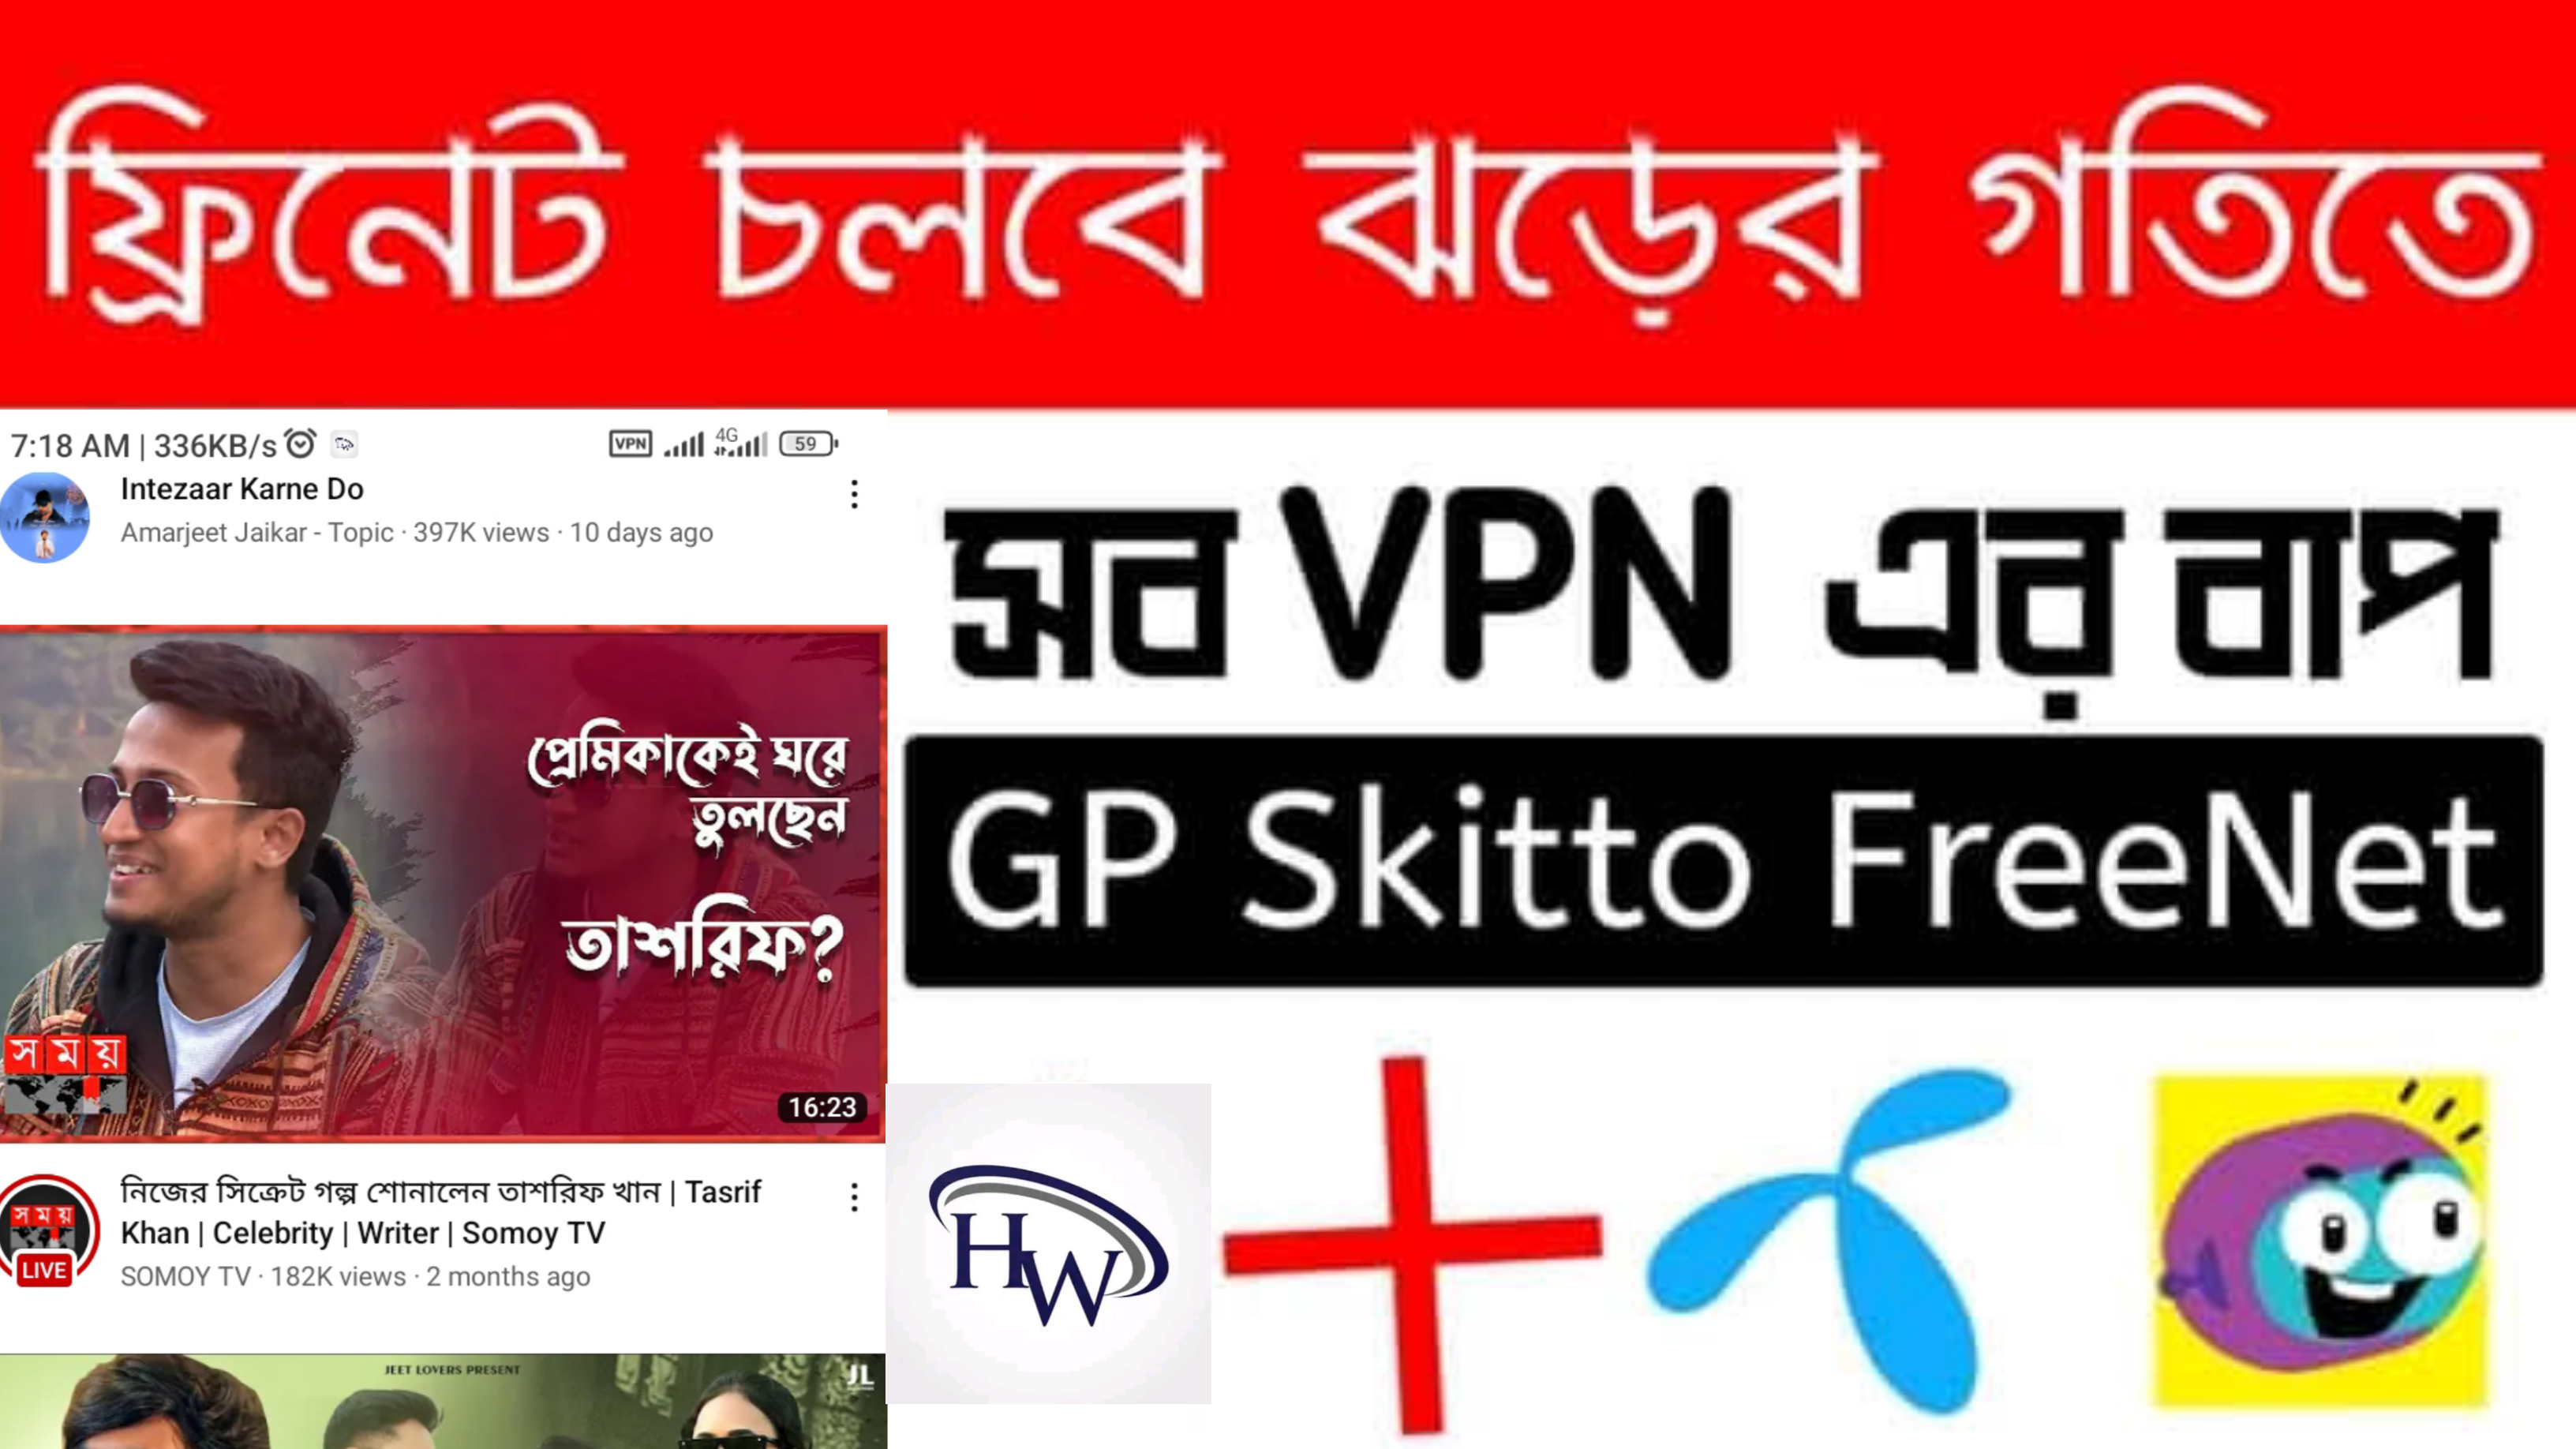 Skitto & GP সিমে জন্য নিয়ে নিন Unlimited ইন্টারনেট [ VPN ] – সুপার স্পিড।